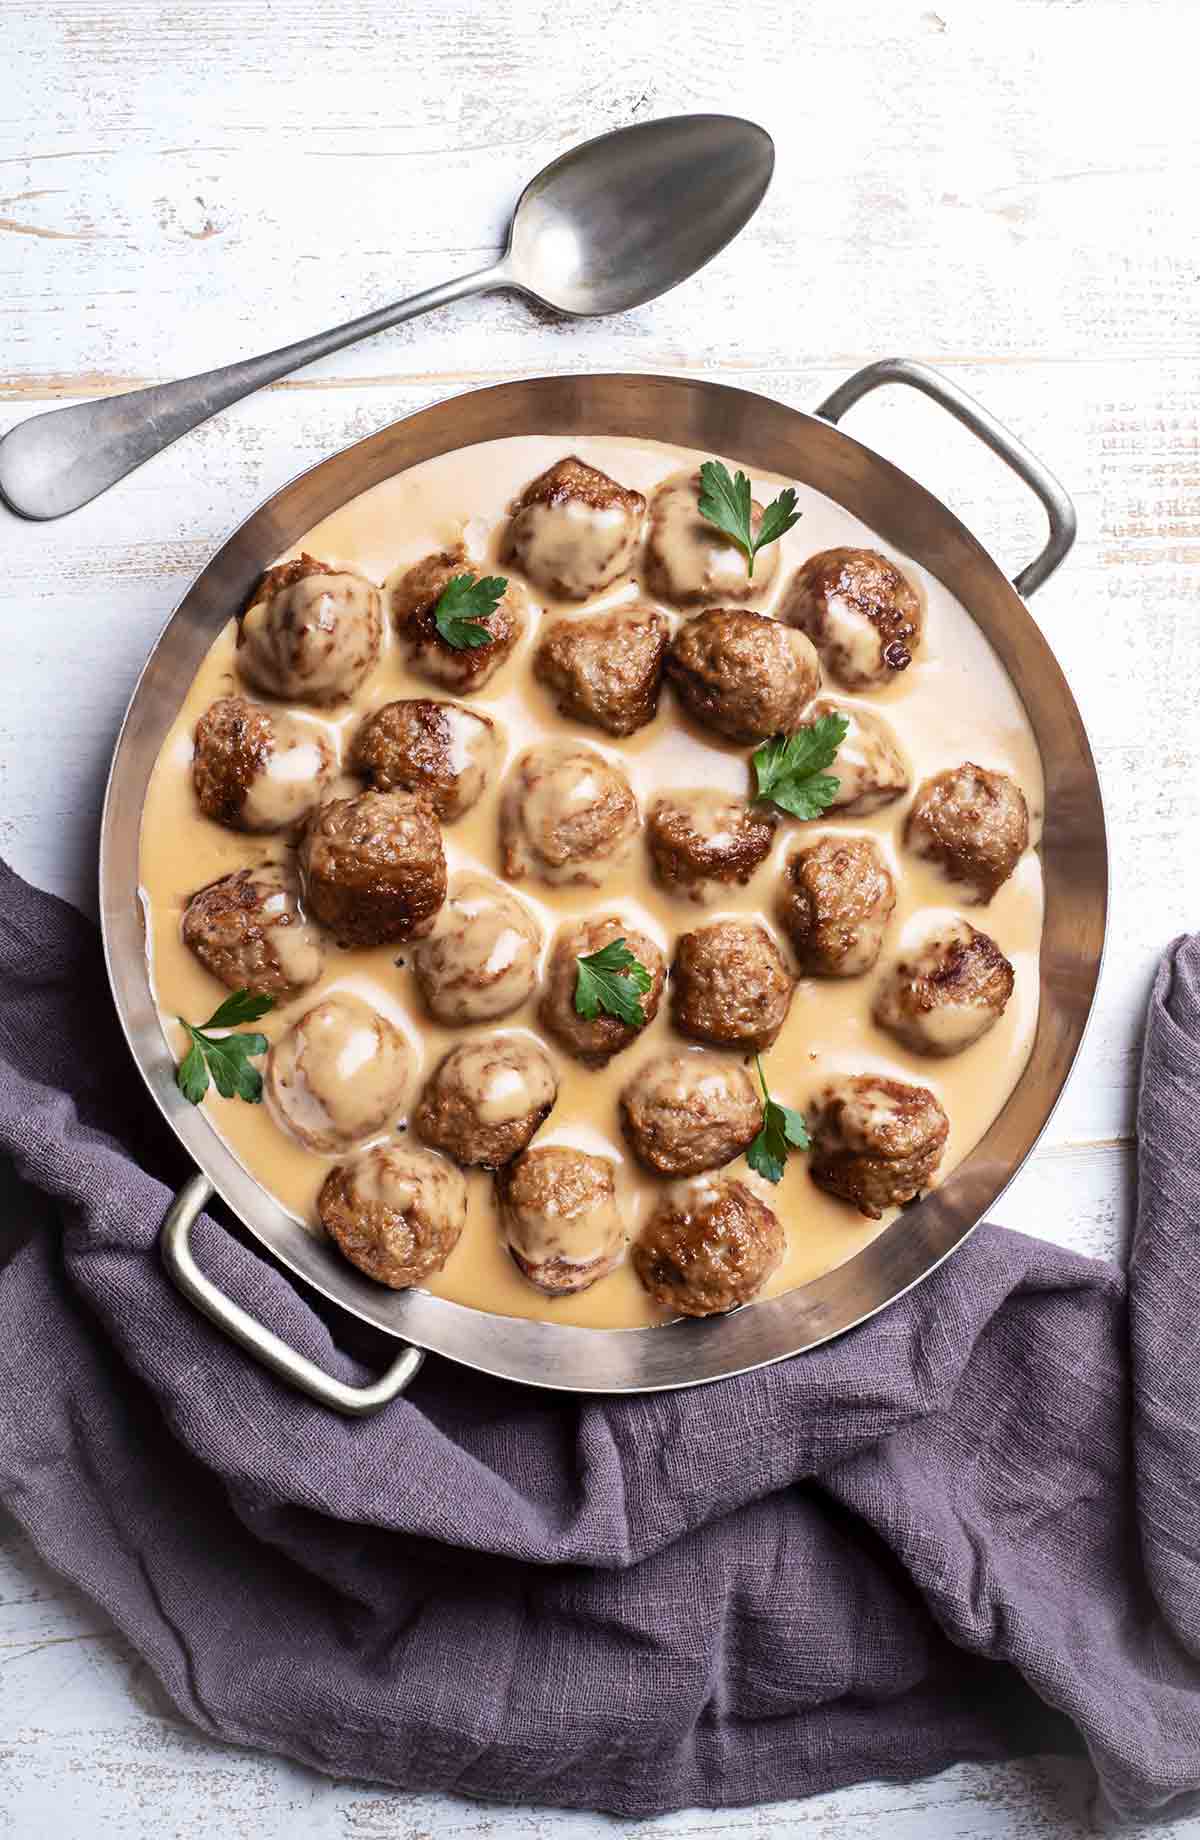 A skillet of homemade IKEA Swedish meatballs, cream gravy, and parsley.